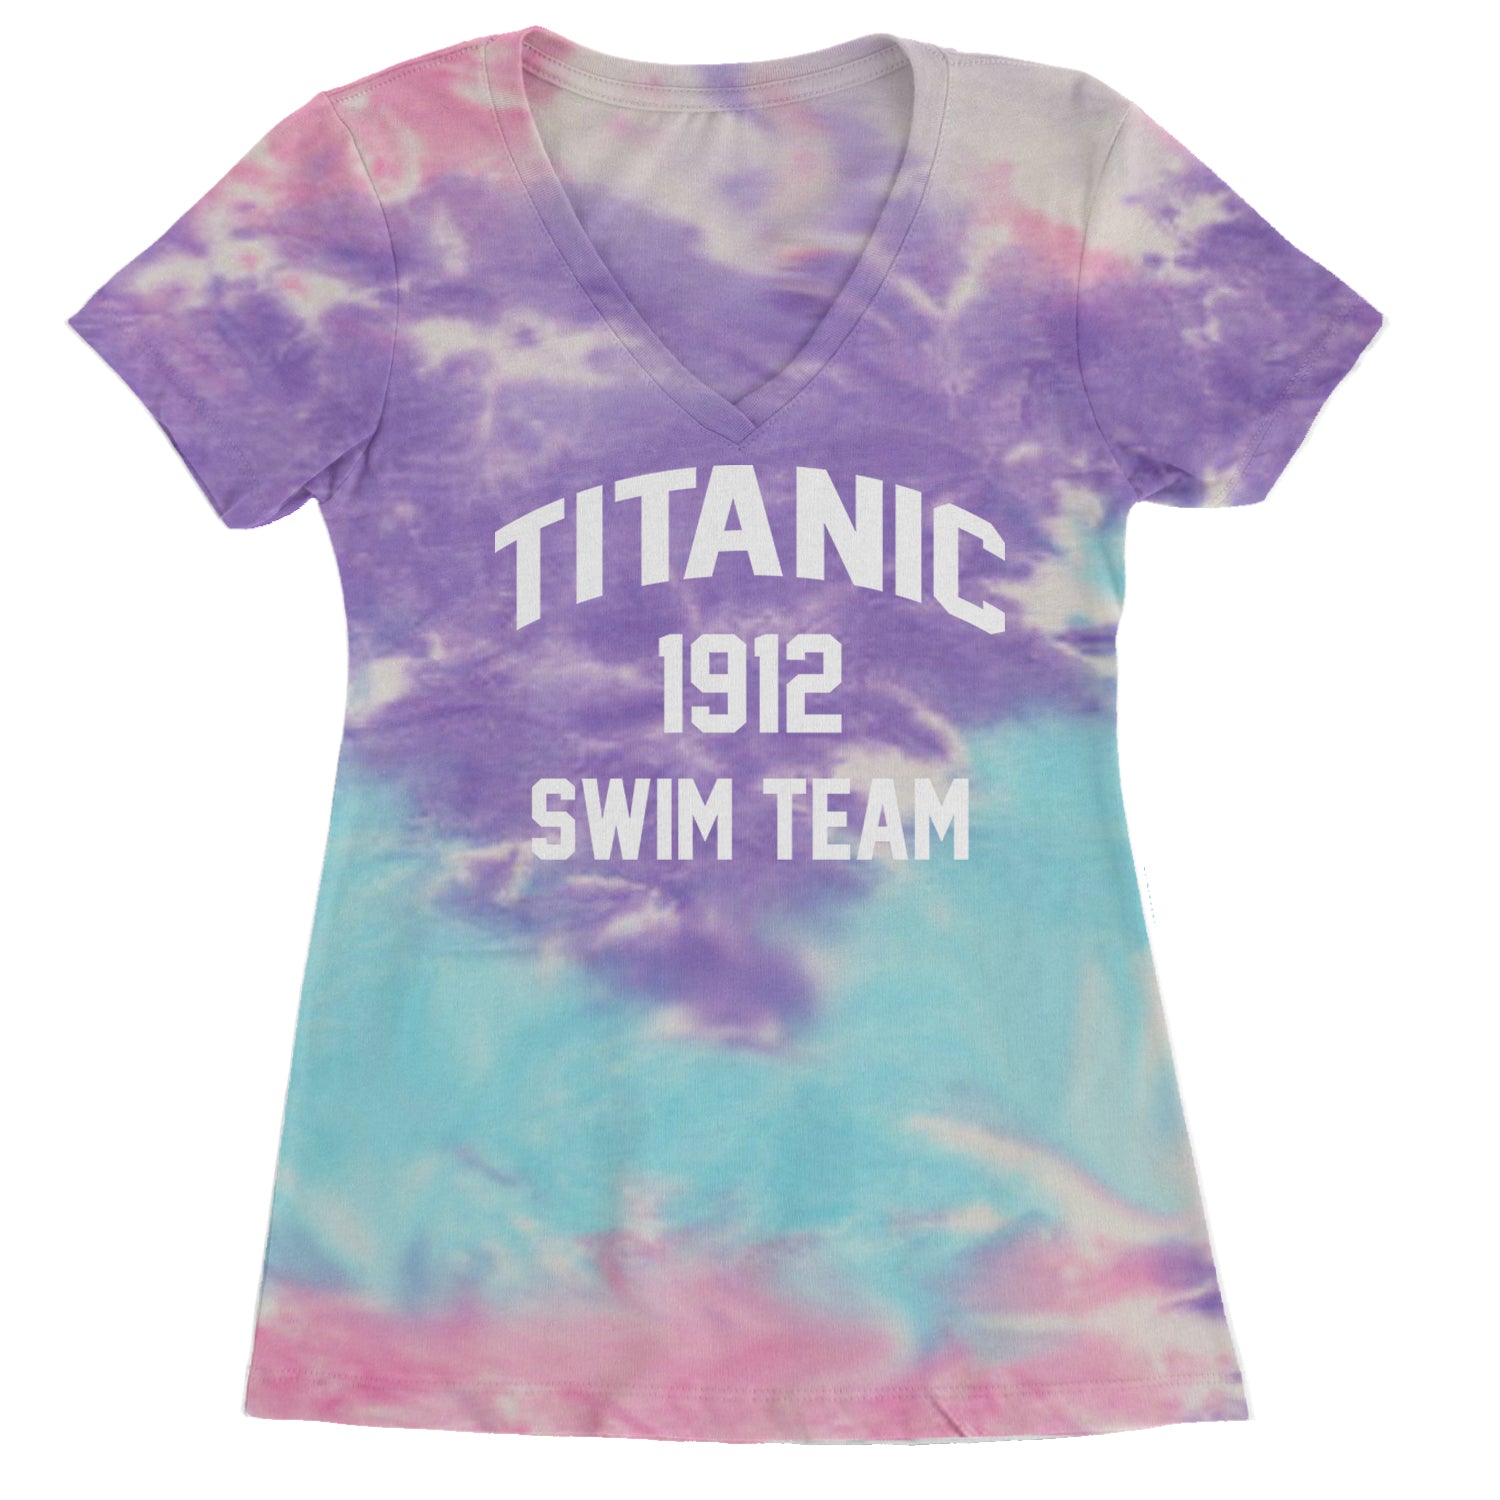 Titanic Swim Team 1912 Funny Cruise Ladies V-Neck T-shirt Cotton Candy